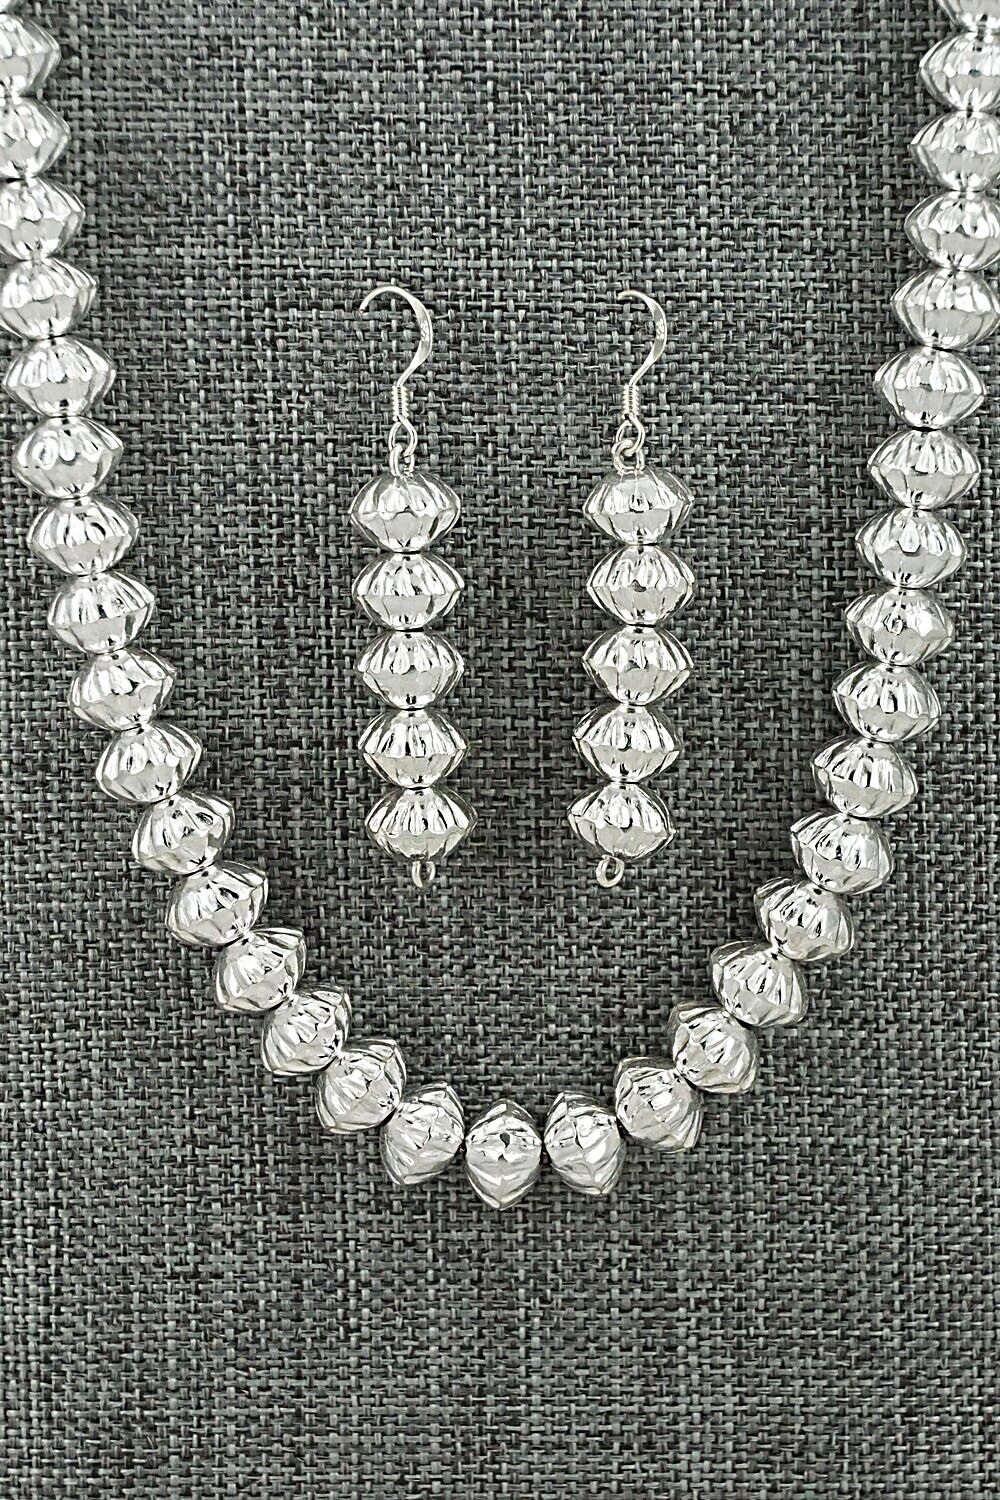 Sterling Silver Navajo Pearl Necklace & Earrings - Crystal Haley